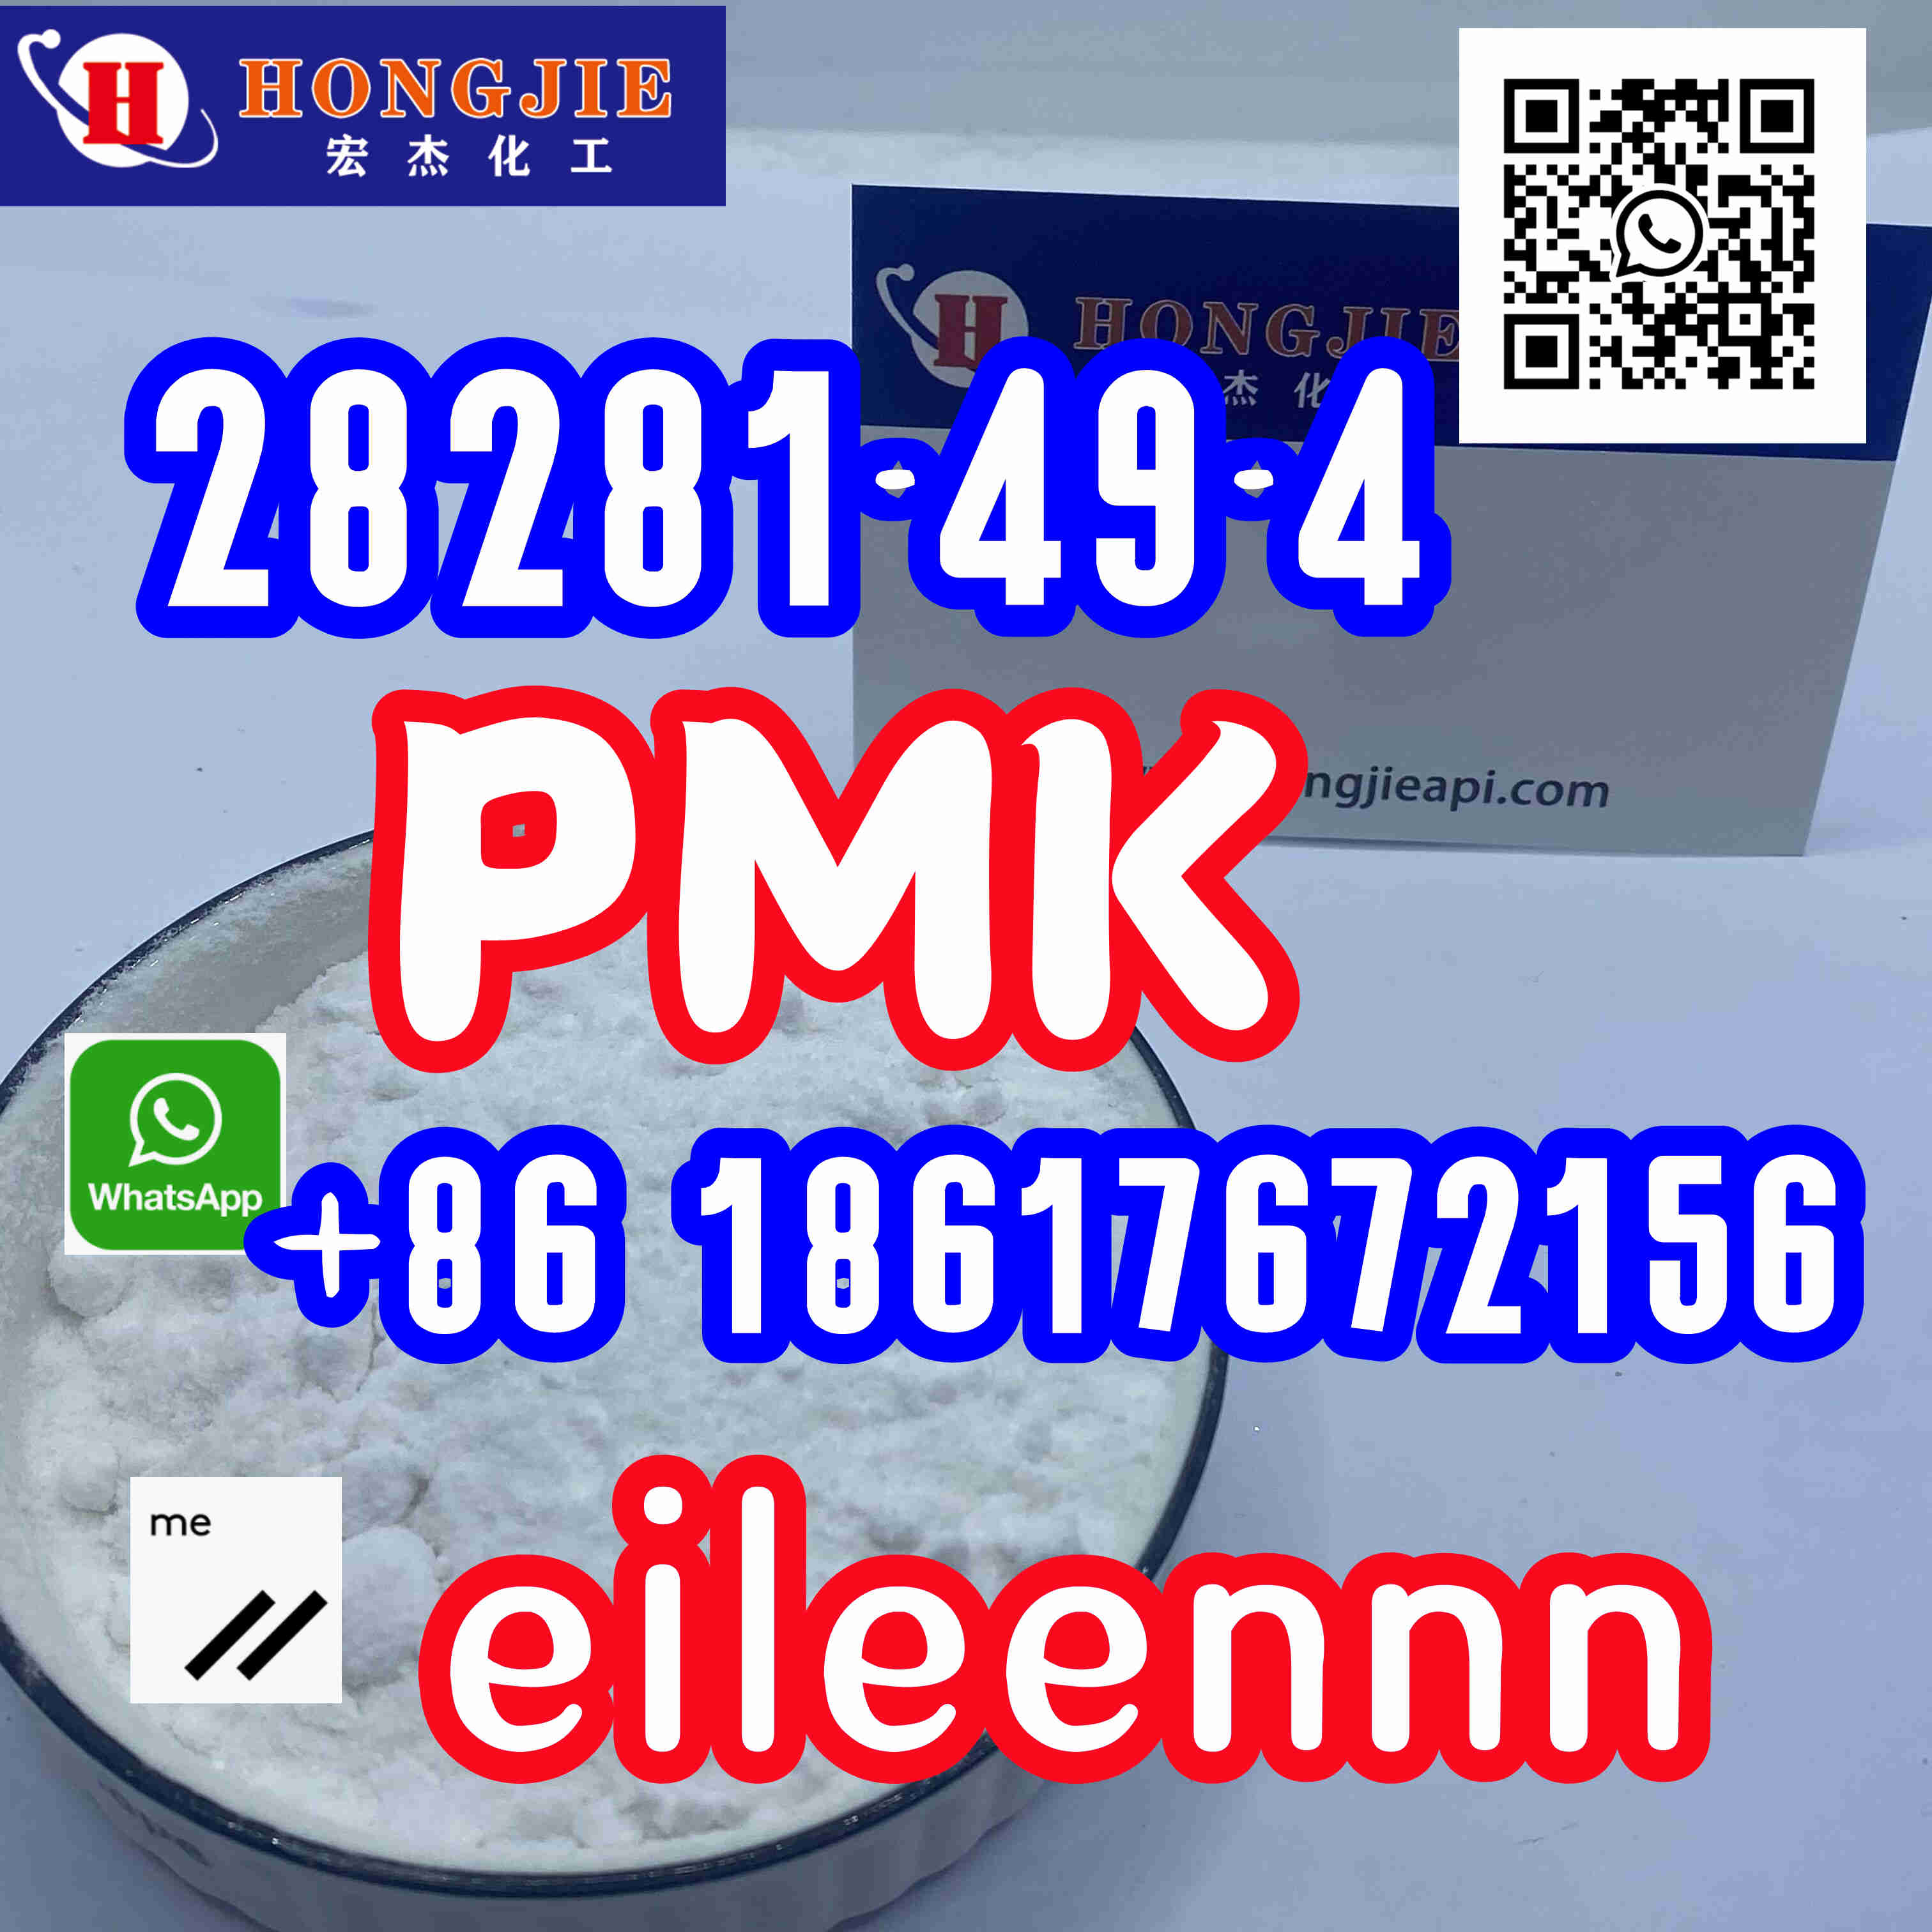 28281-49-4 PMK powder and PMK oil Wholesale high quality - photo